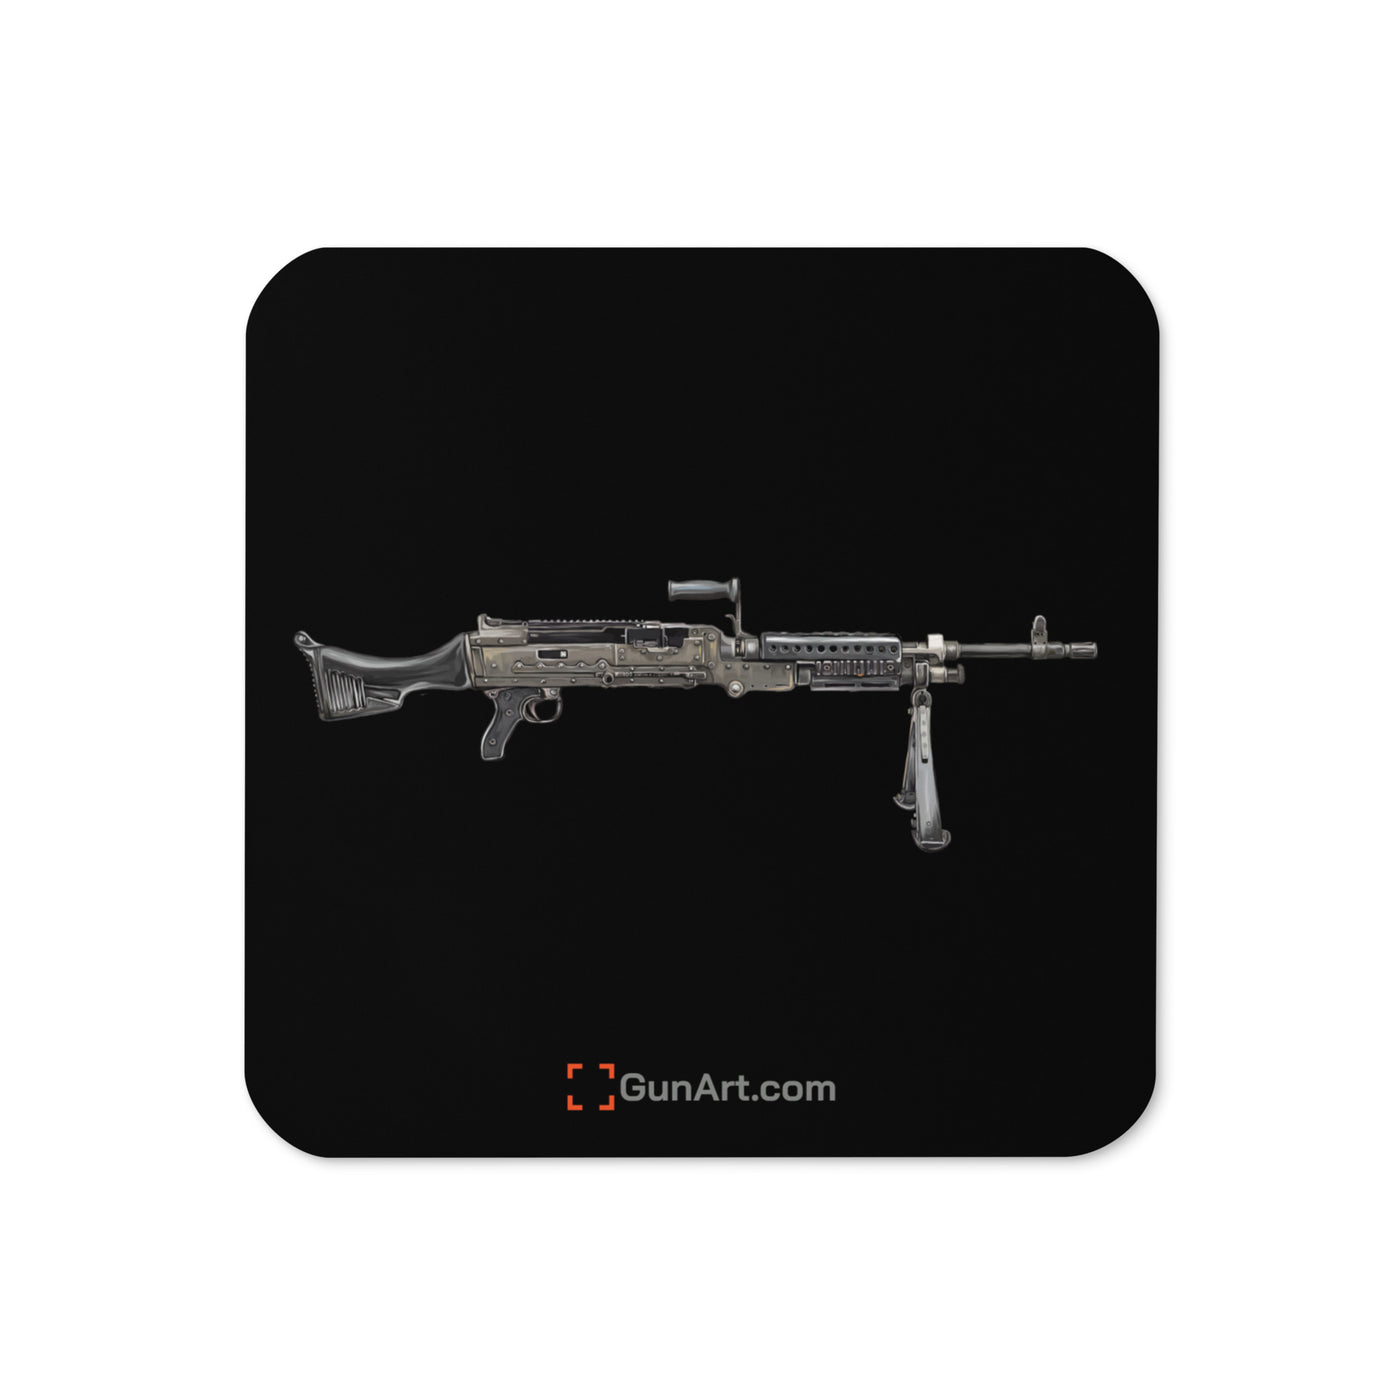 M240B - Belt Fed 7.62x51 Machine Gun Cork-back Coaster - Just The Piece - Black Background